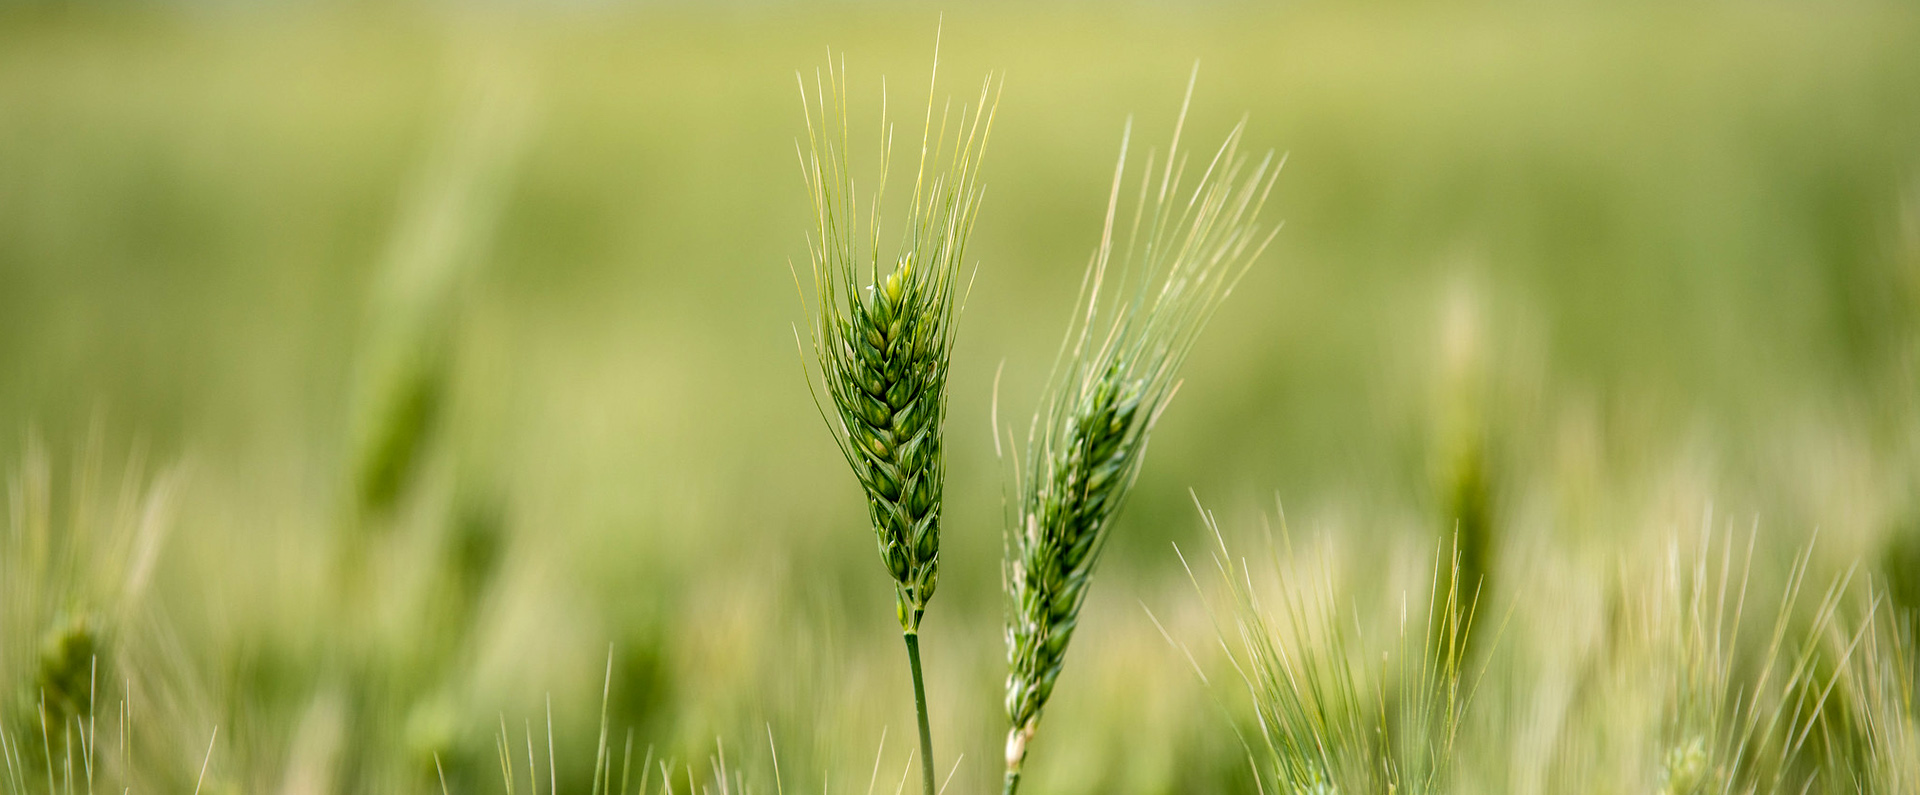 A stalk of wheat in a wheat field